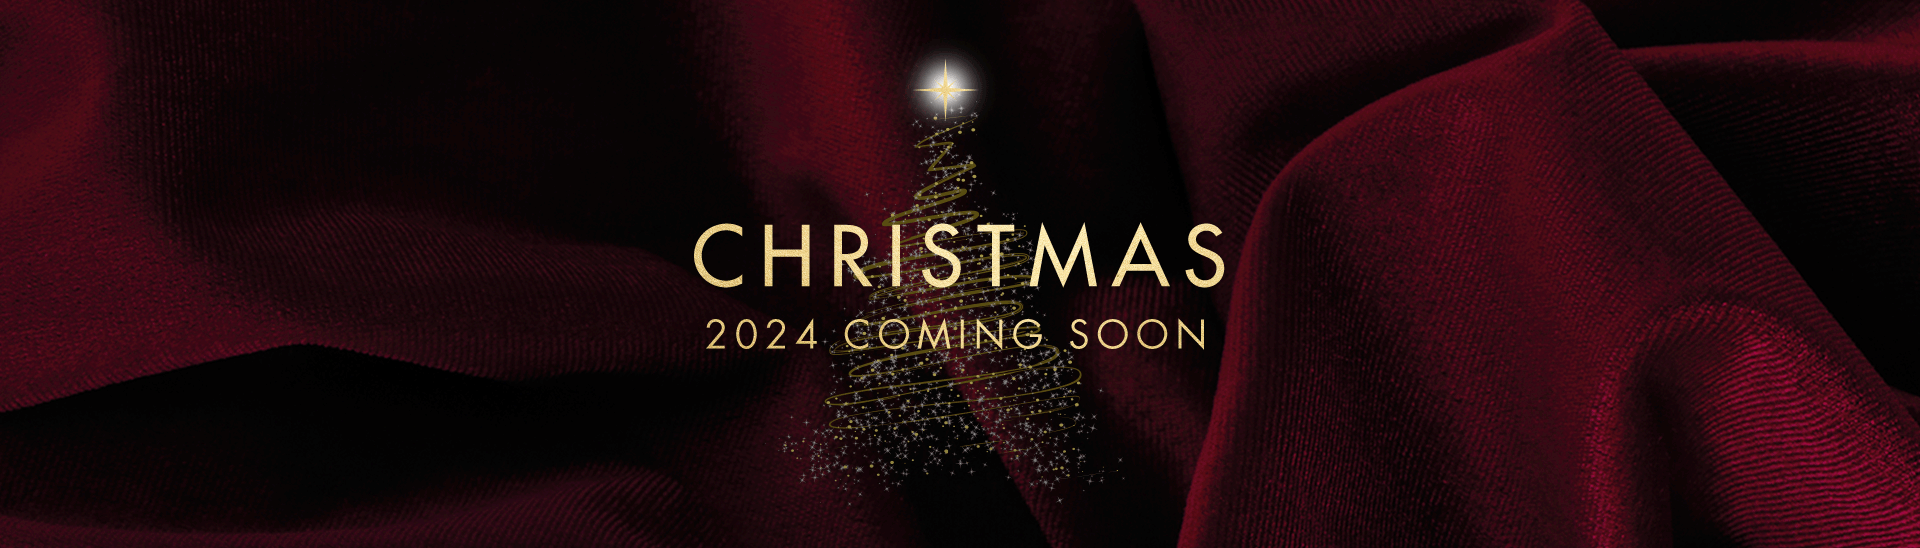 Christmas 2024 at Poole